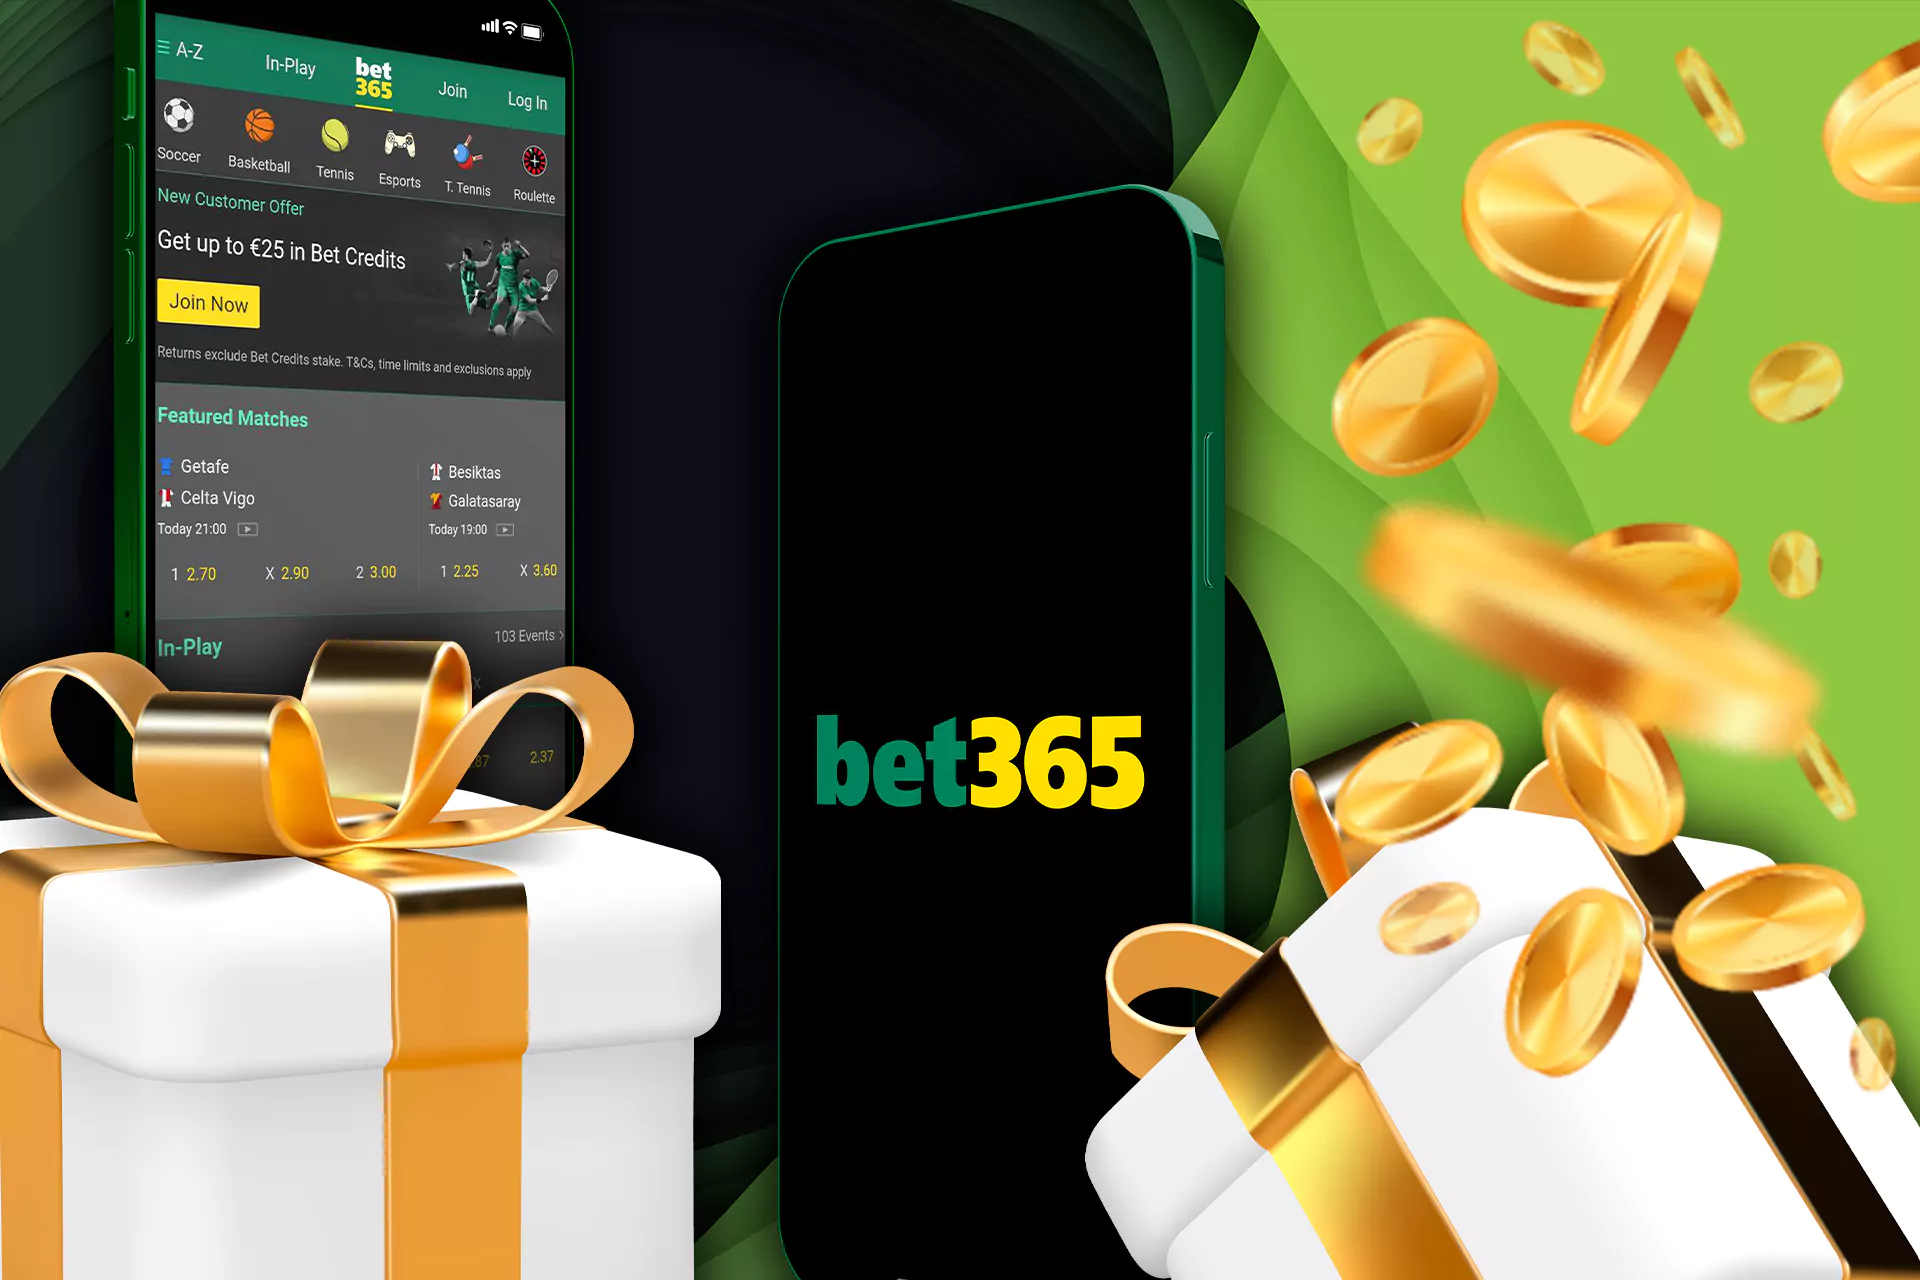 Bonuses for Bet365 app players.